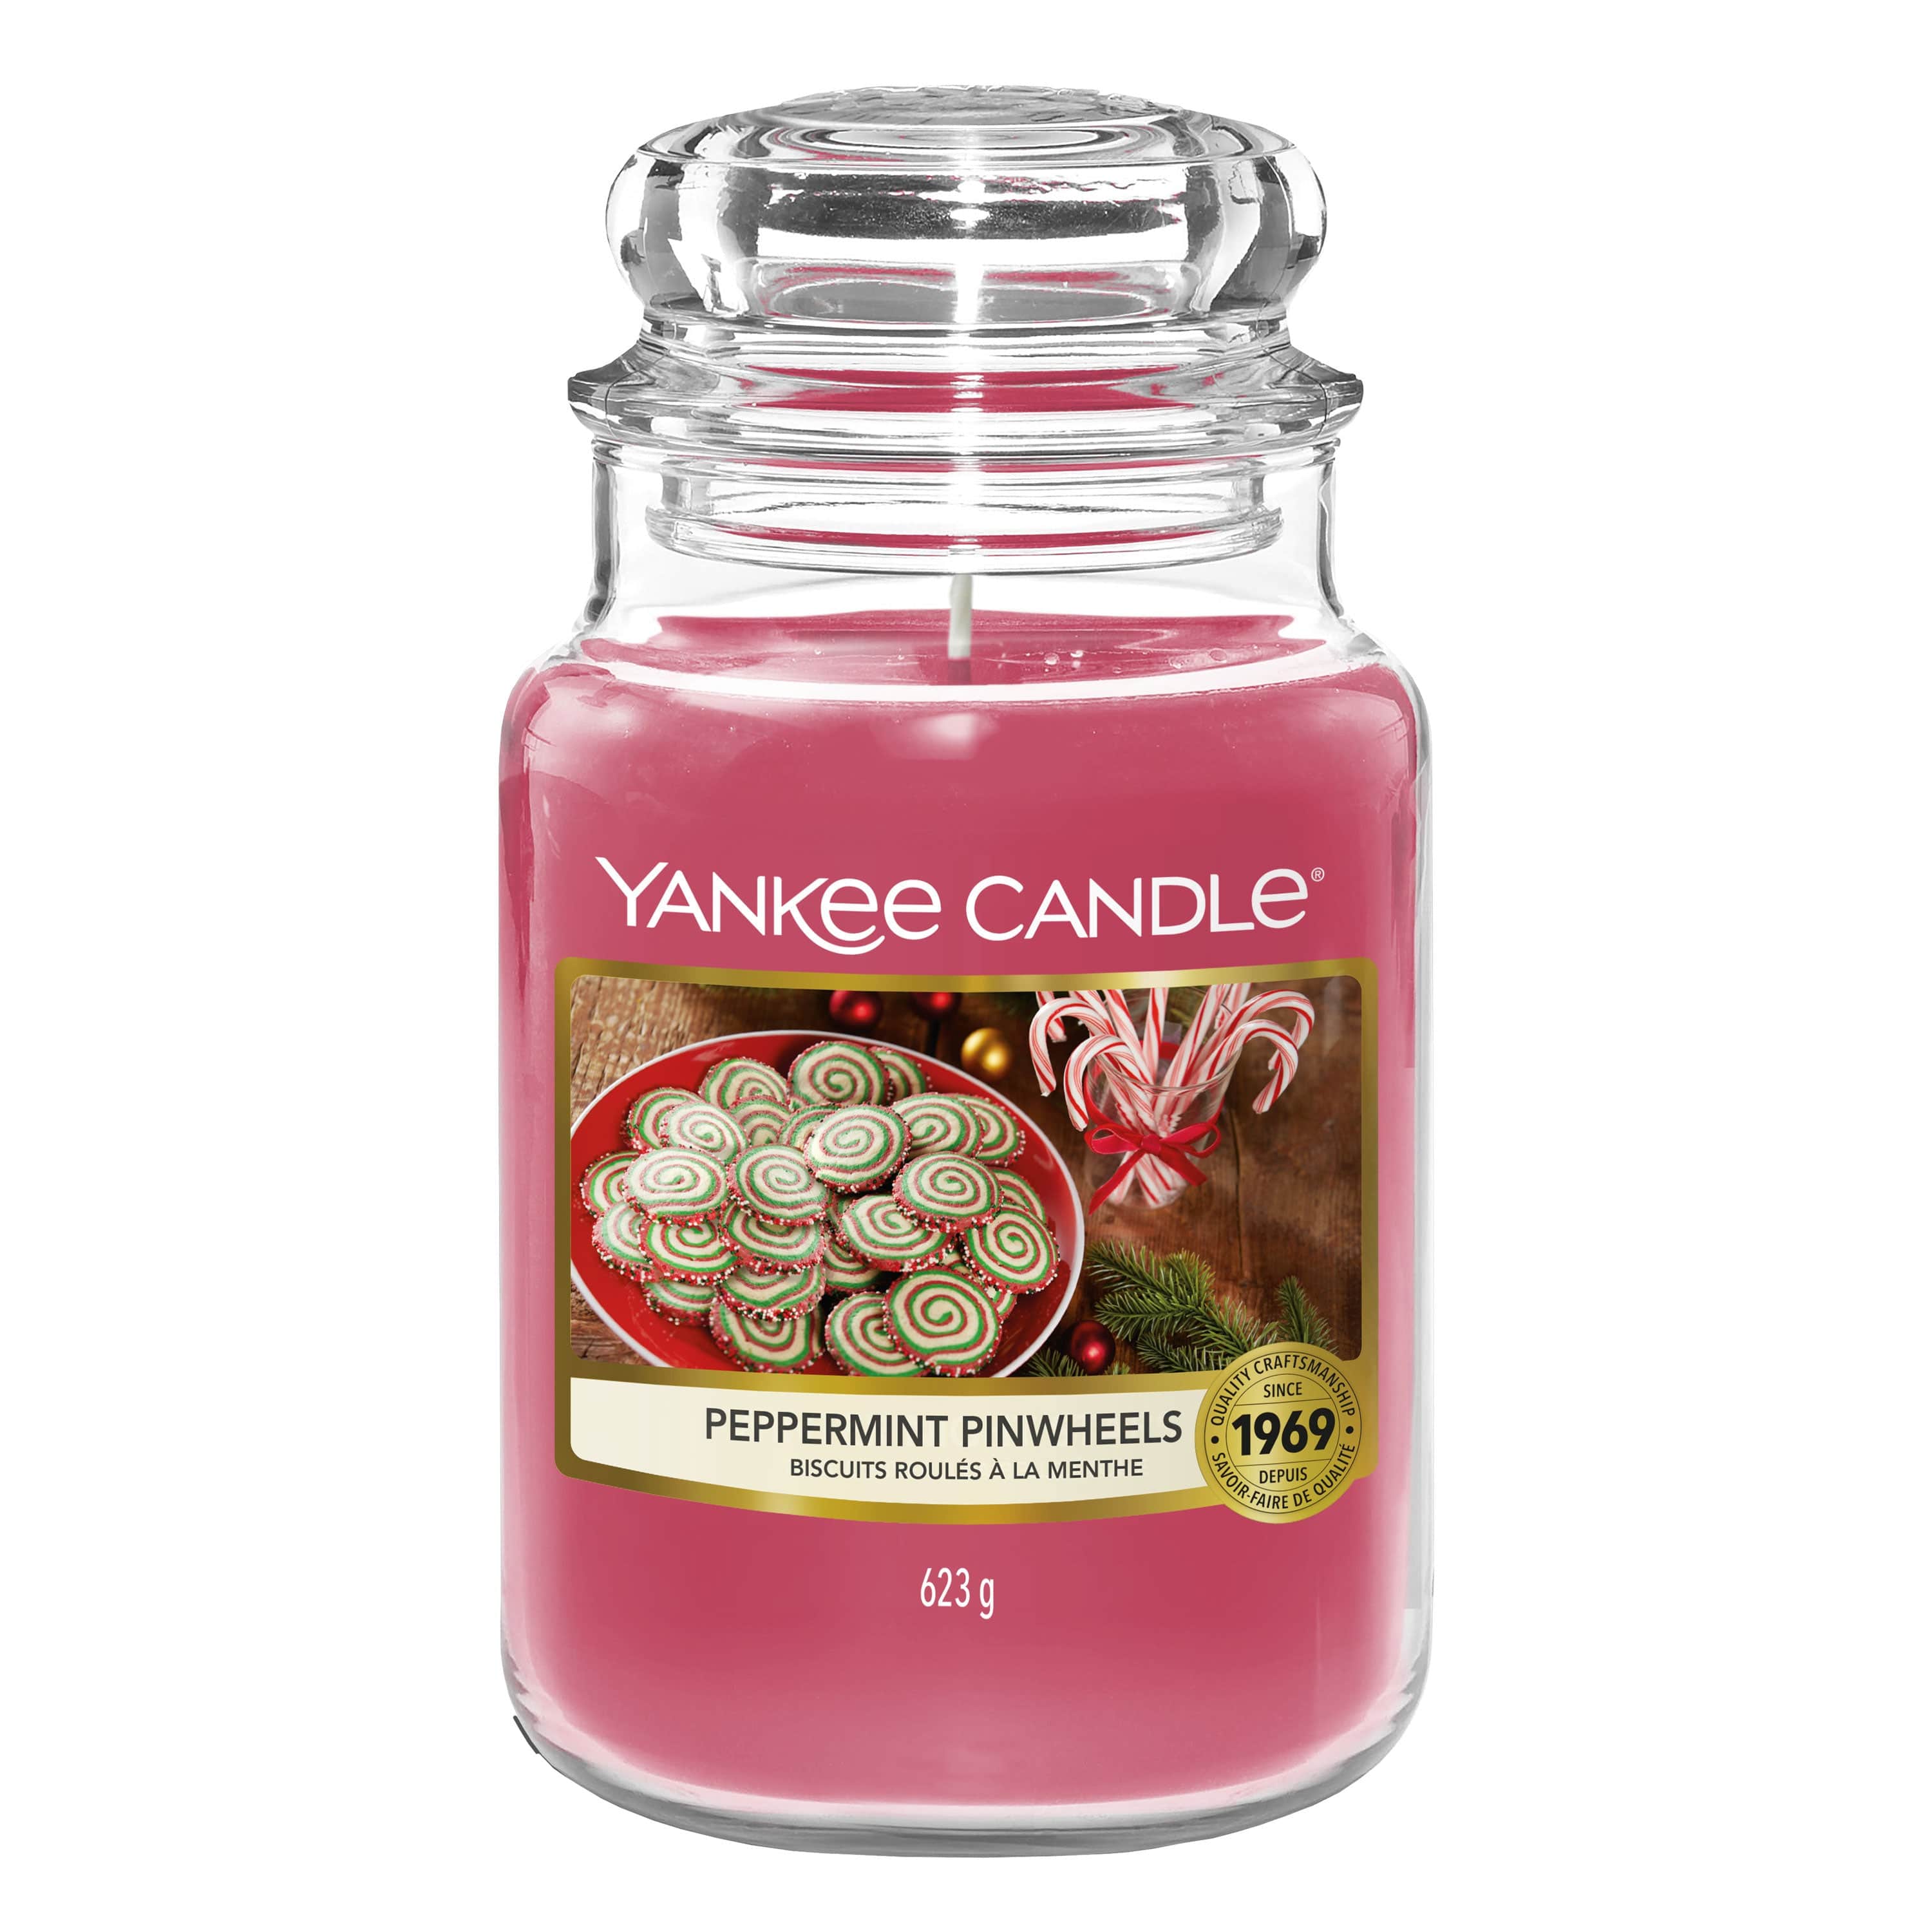  YANKEE CANDLE Snowflake Cookie Large Jar Candle, Pink